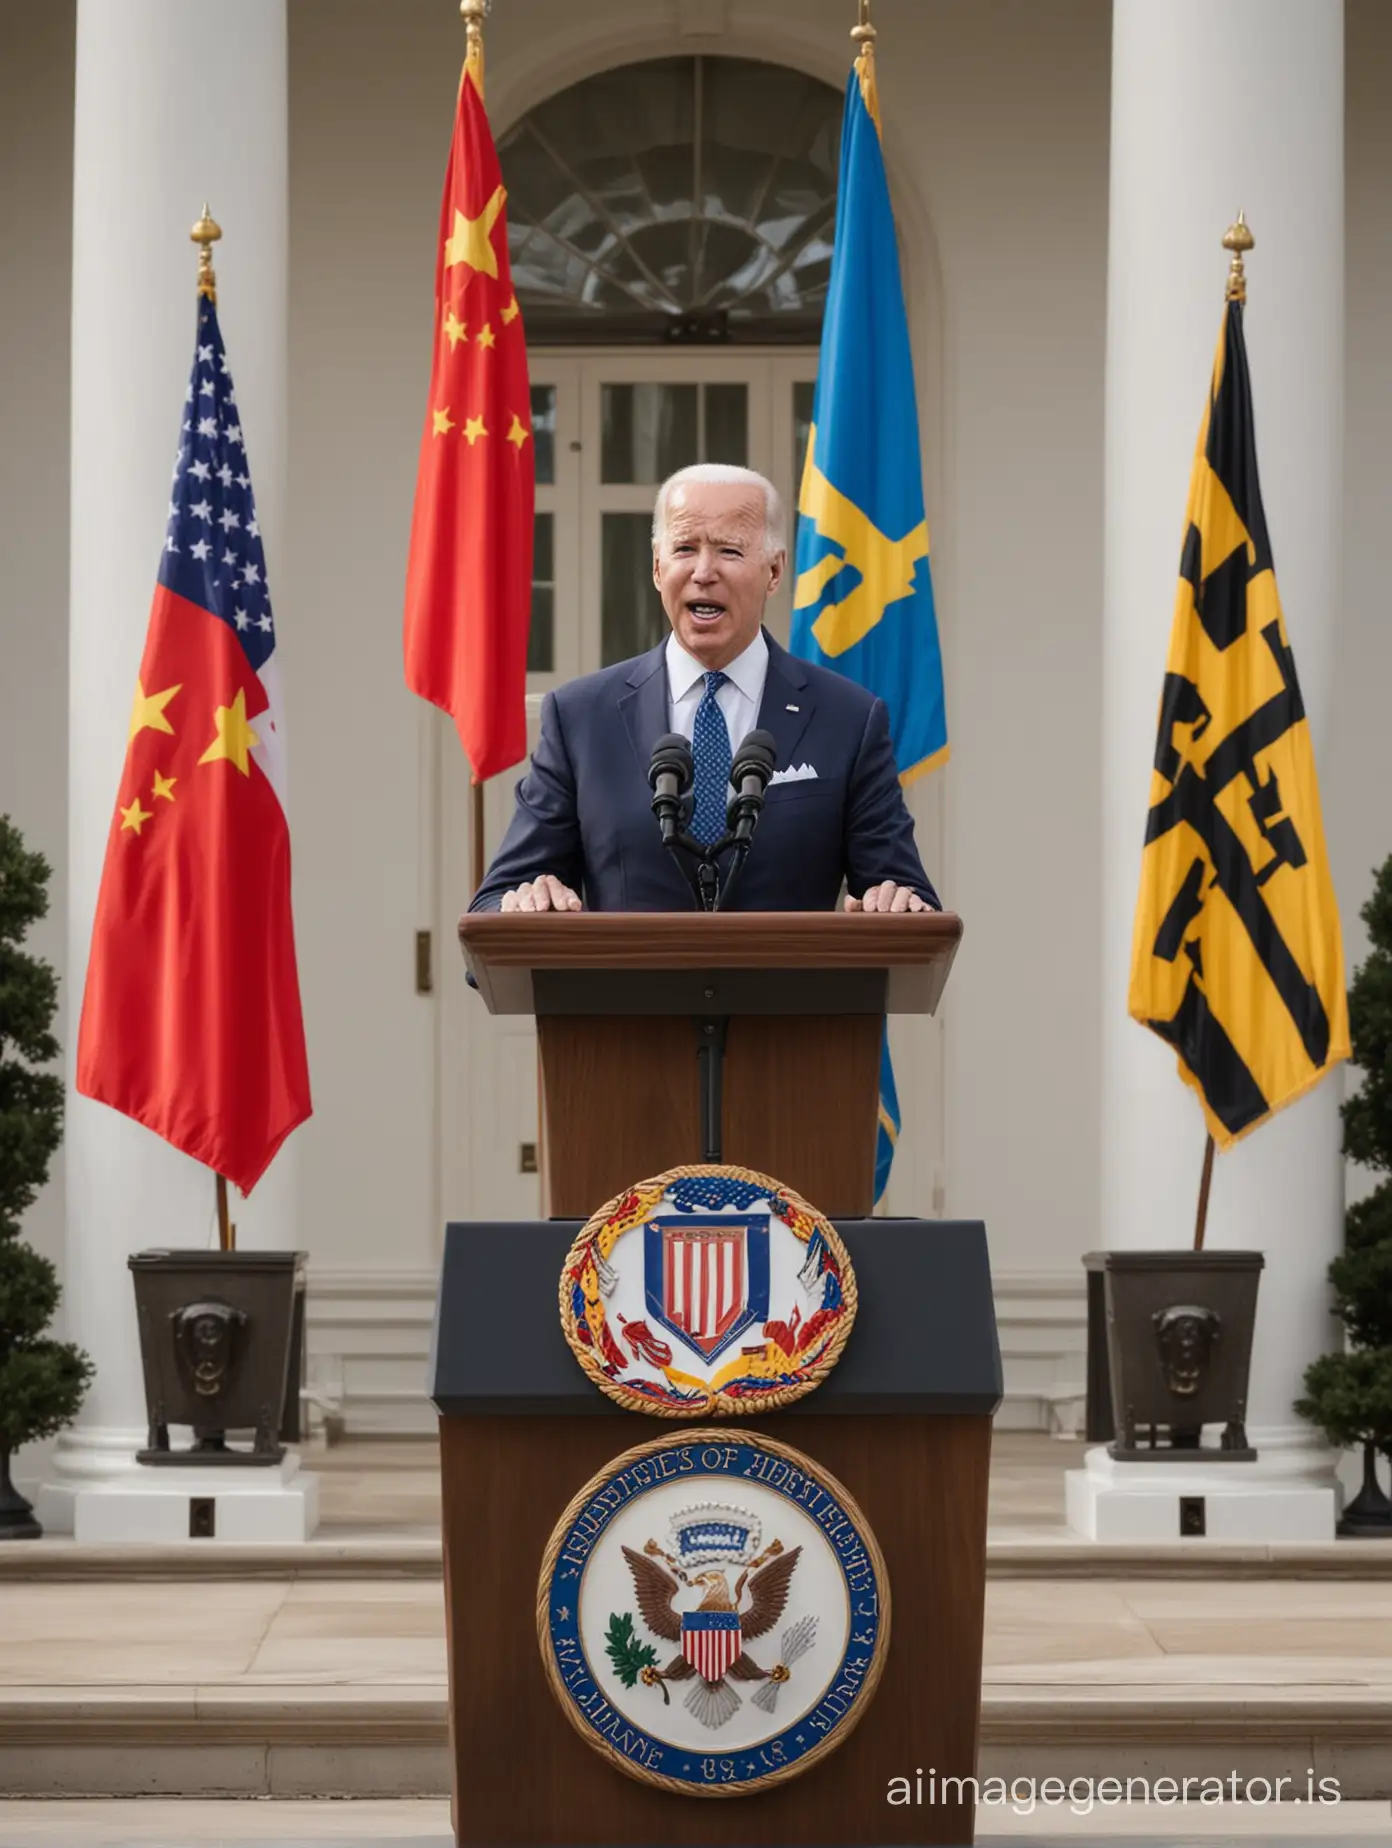 Joe Biden yelling from a podium at the whitehouse. China flag, Ukraine flag, Nazi flag, Nazi SS troupers in the background